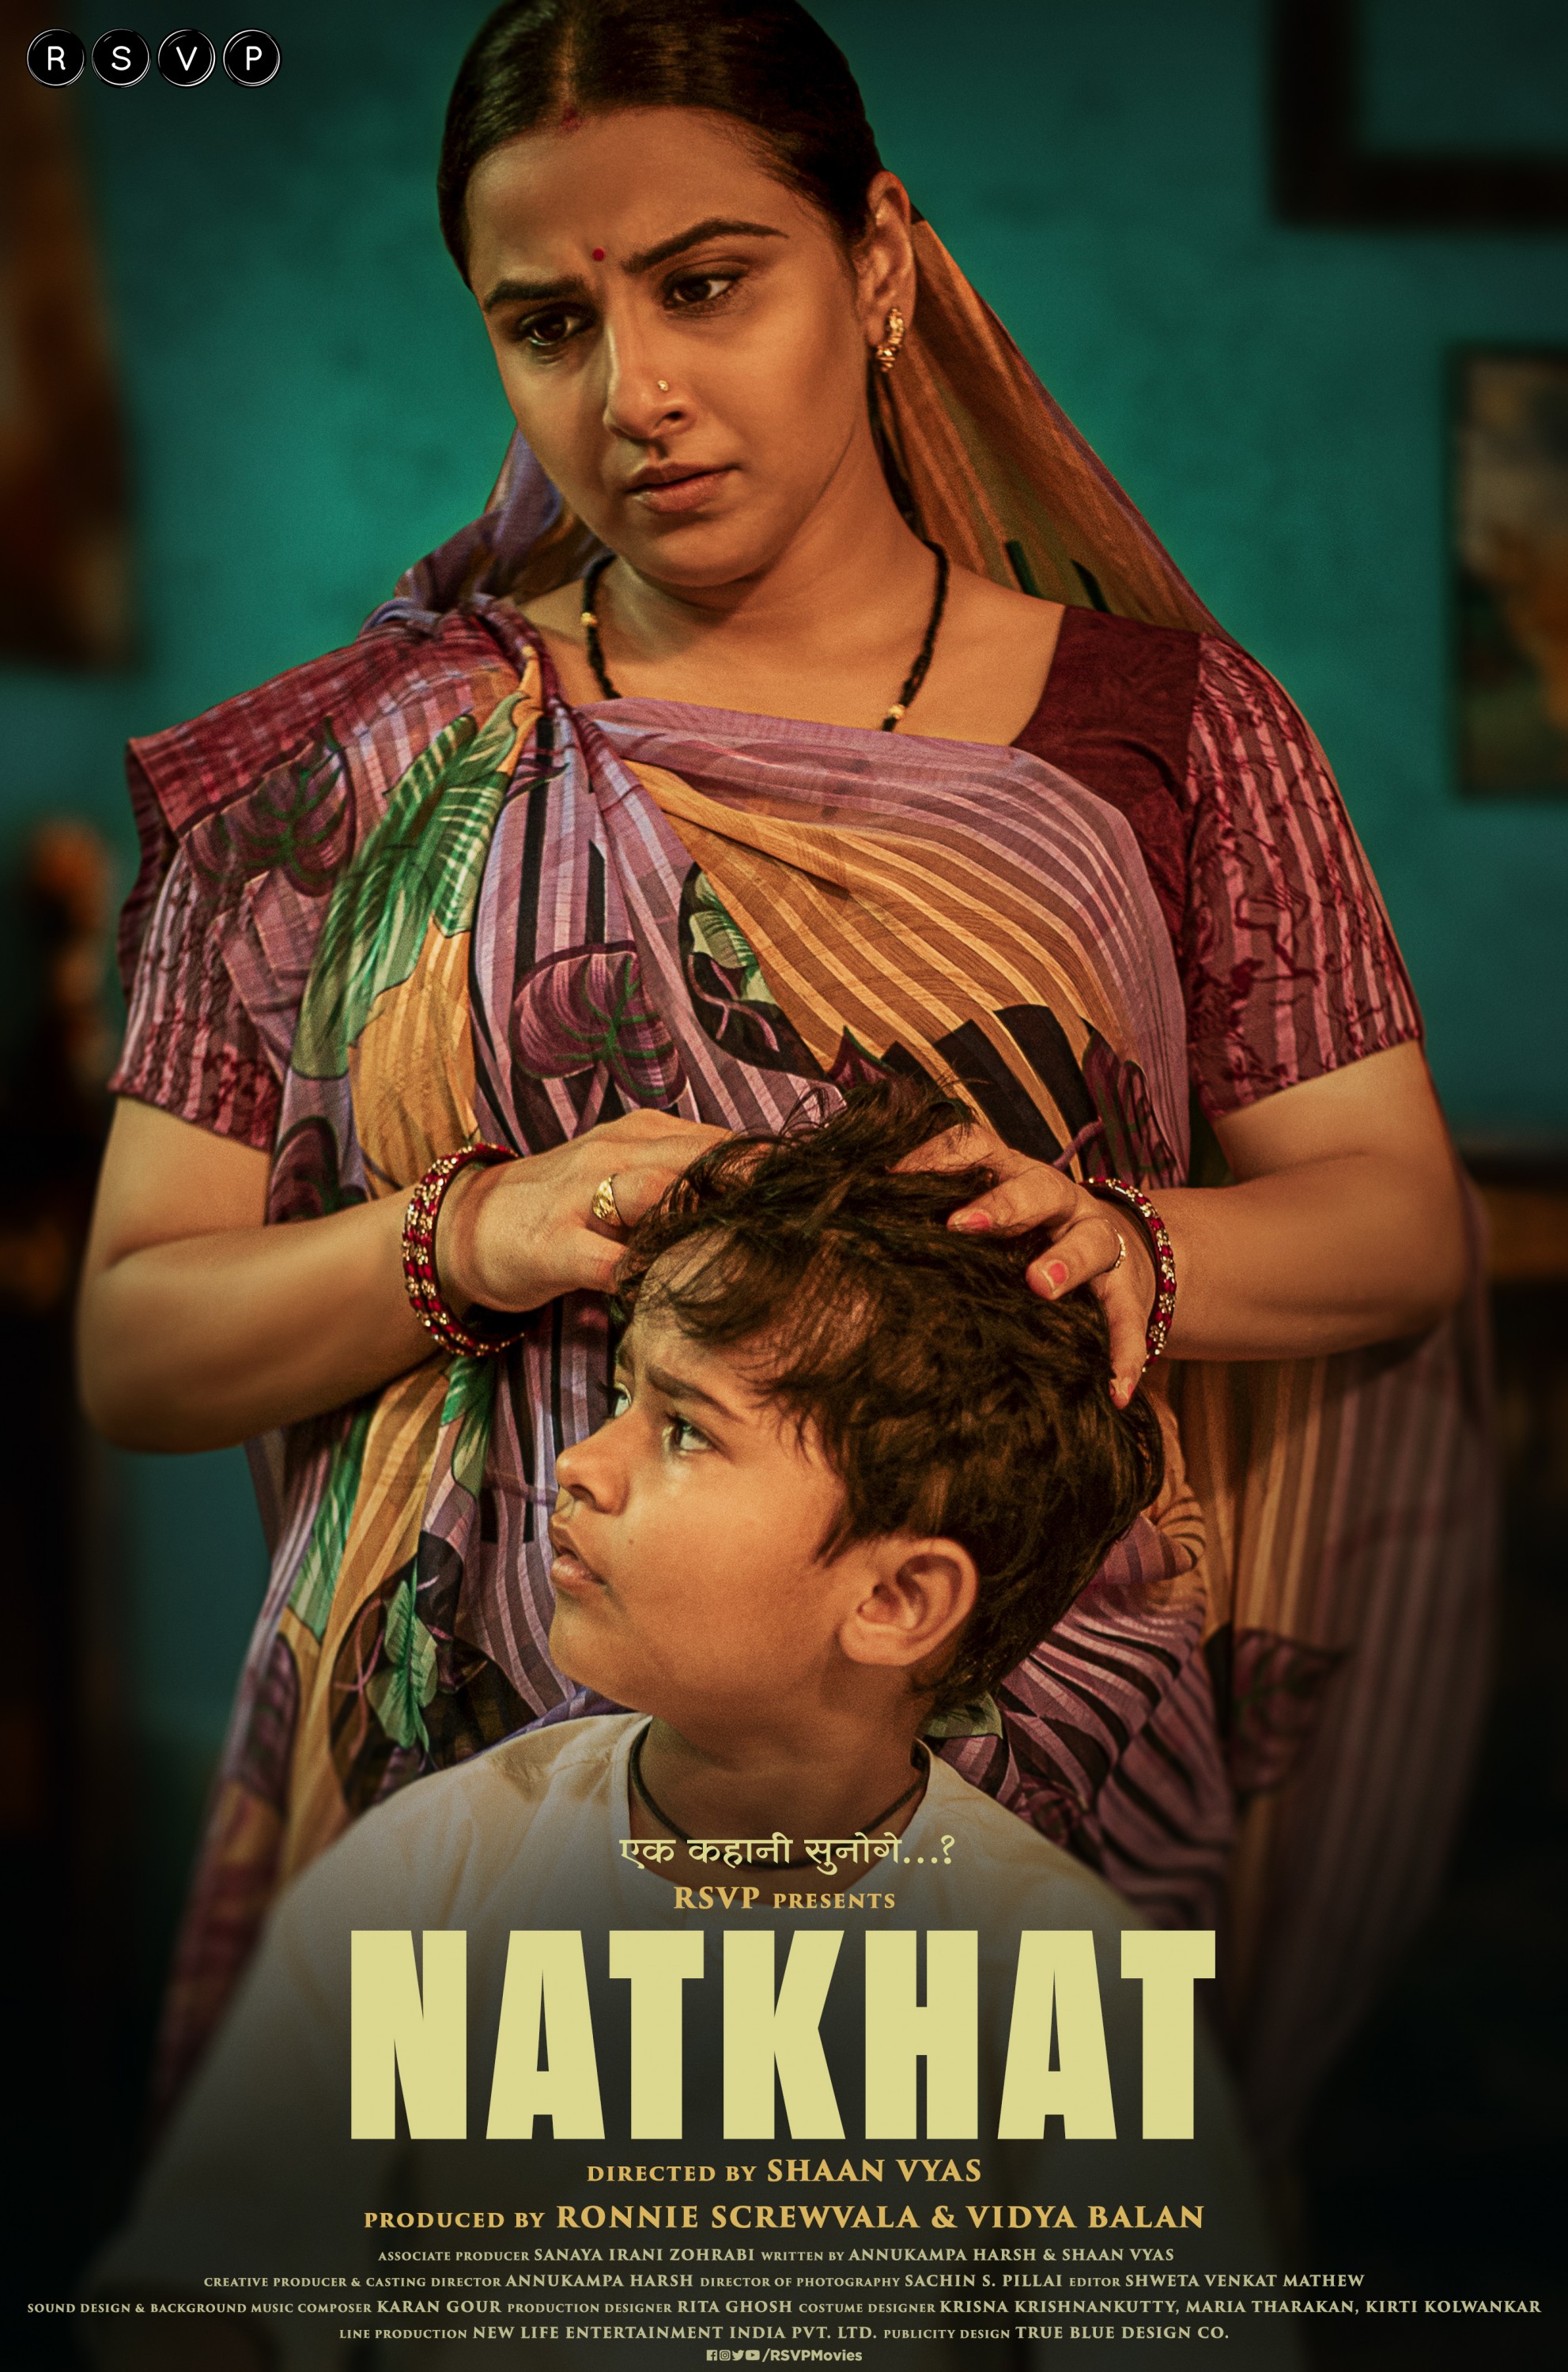 Mega Sized Movie Poster Image for Natkhat